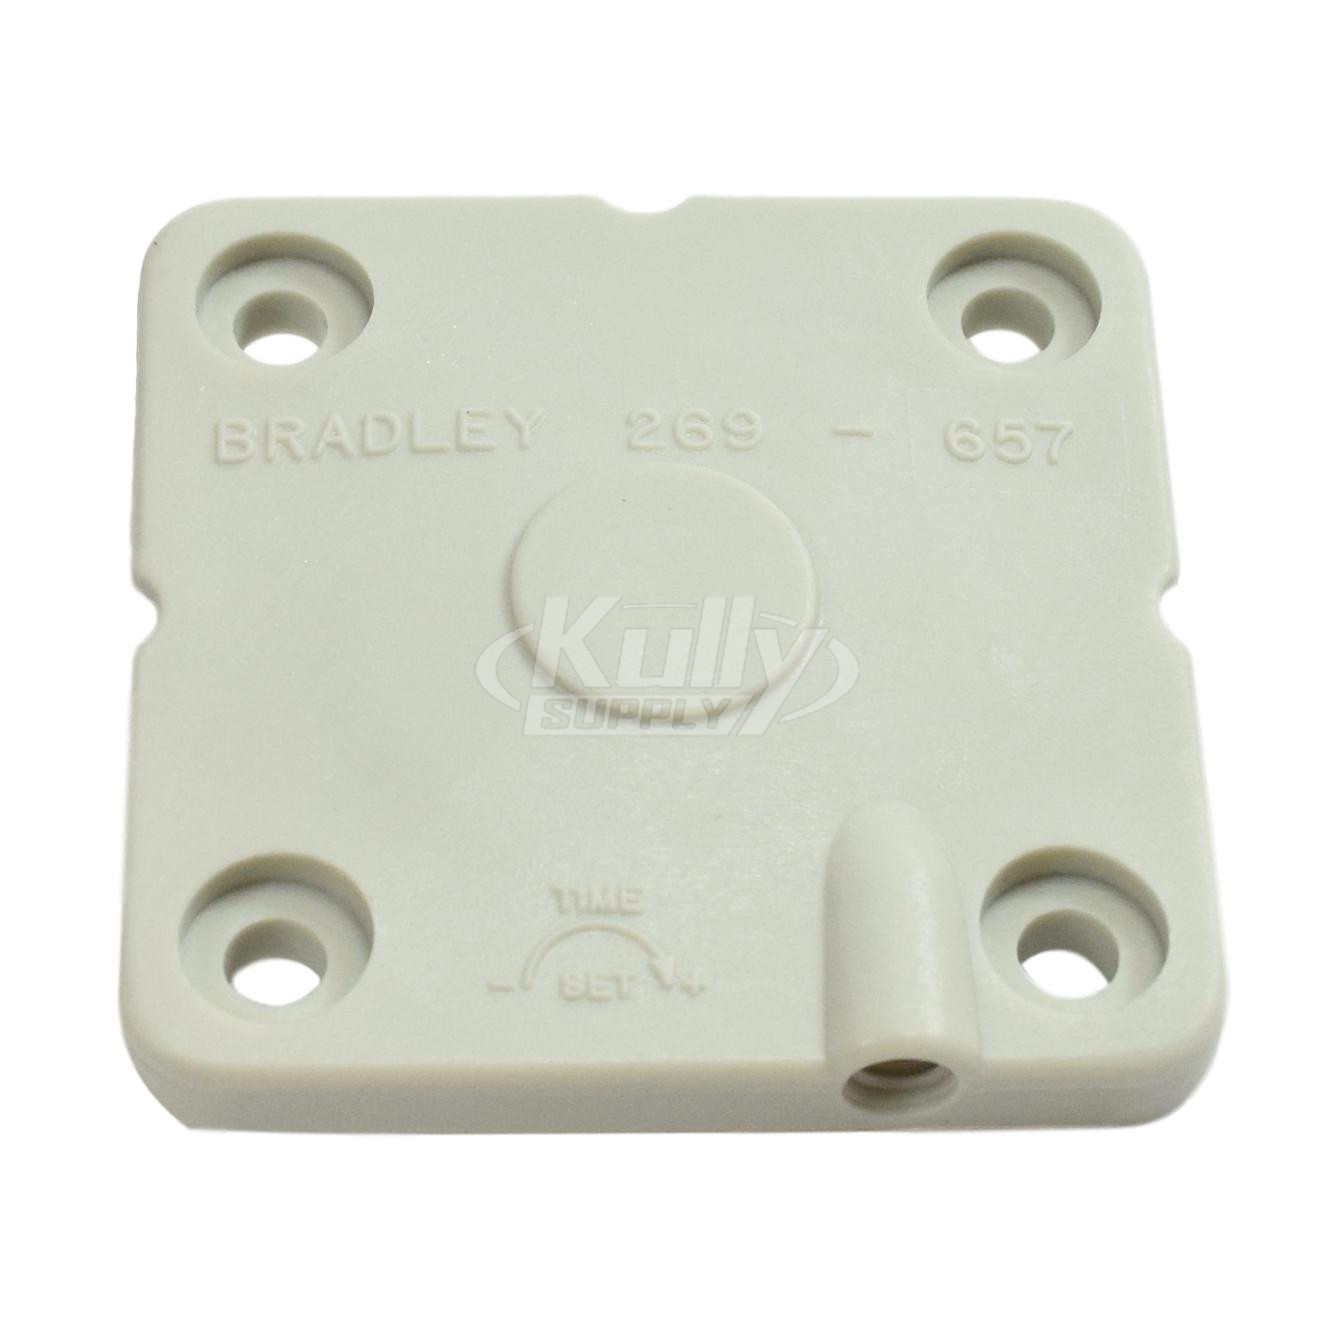 Bradley 269-657 Valve Cover Remote